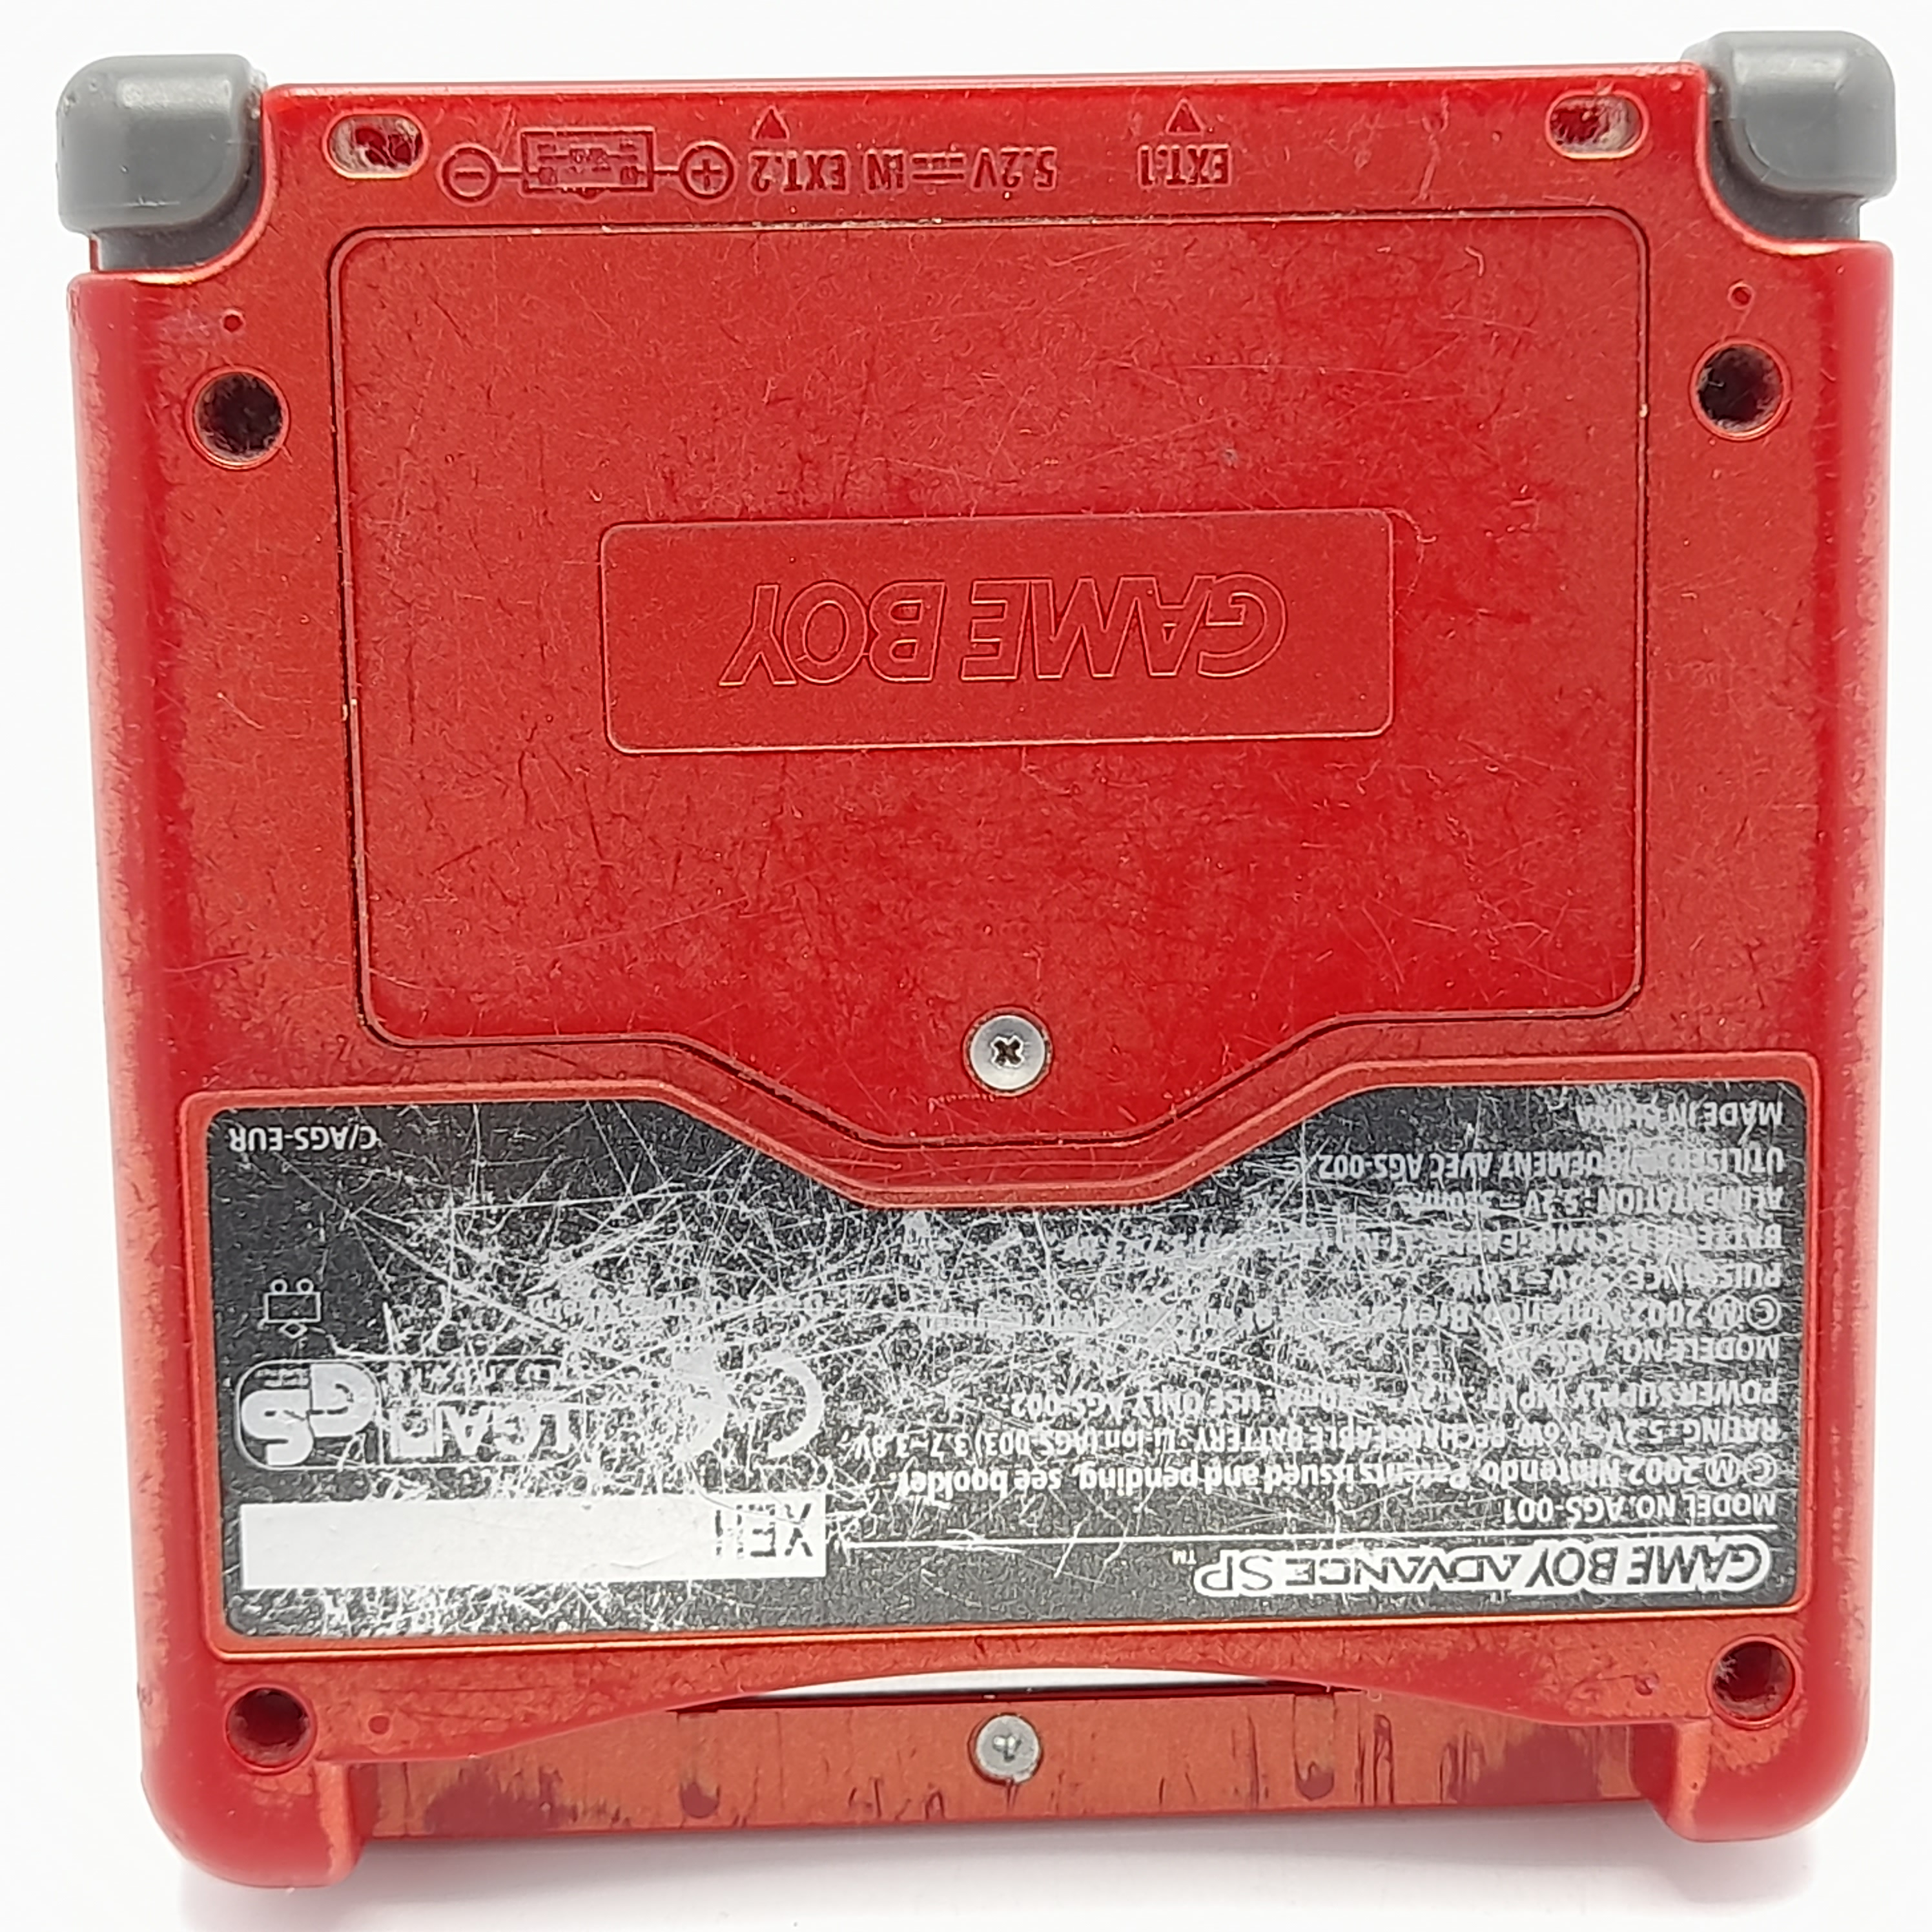 Foto van Game Boy Advance SP Vuur Rood - Mooi